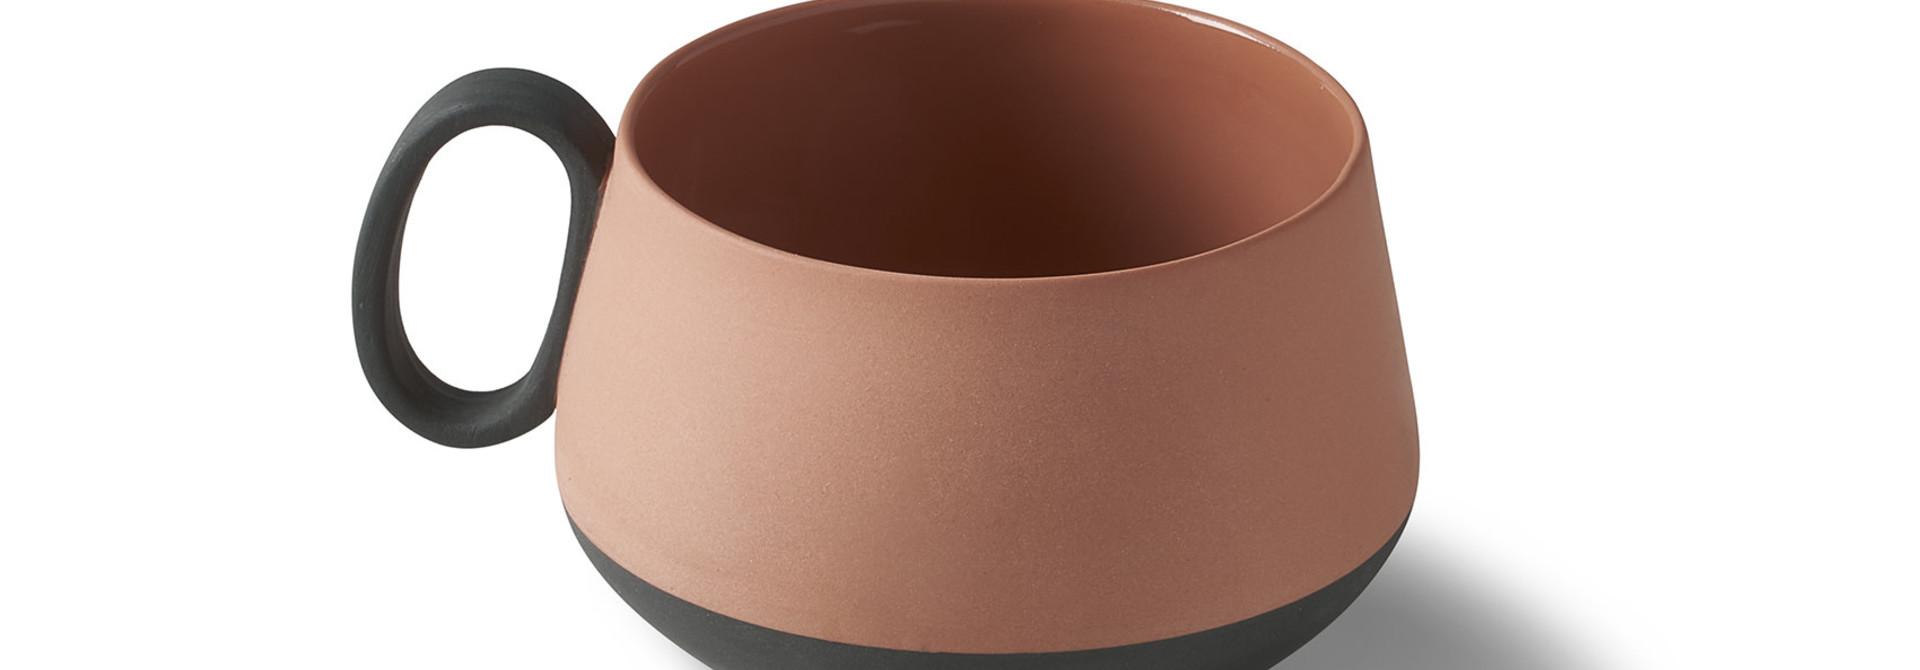 Tube Tea Cup Porcelain - Black&Coral- Esma Dereboy 11x8.5x5.5cm